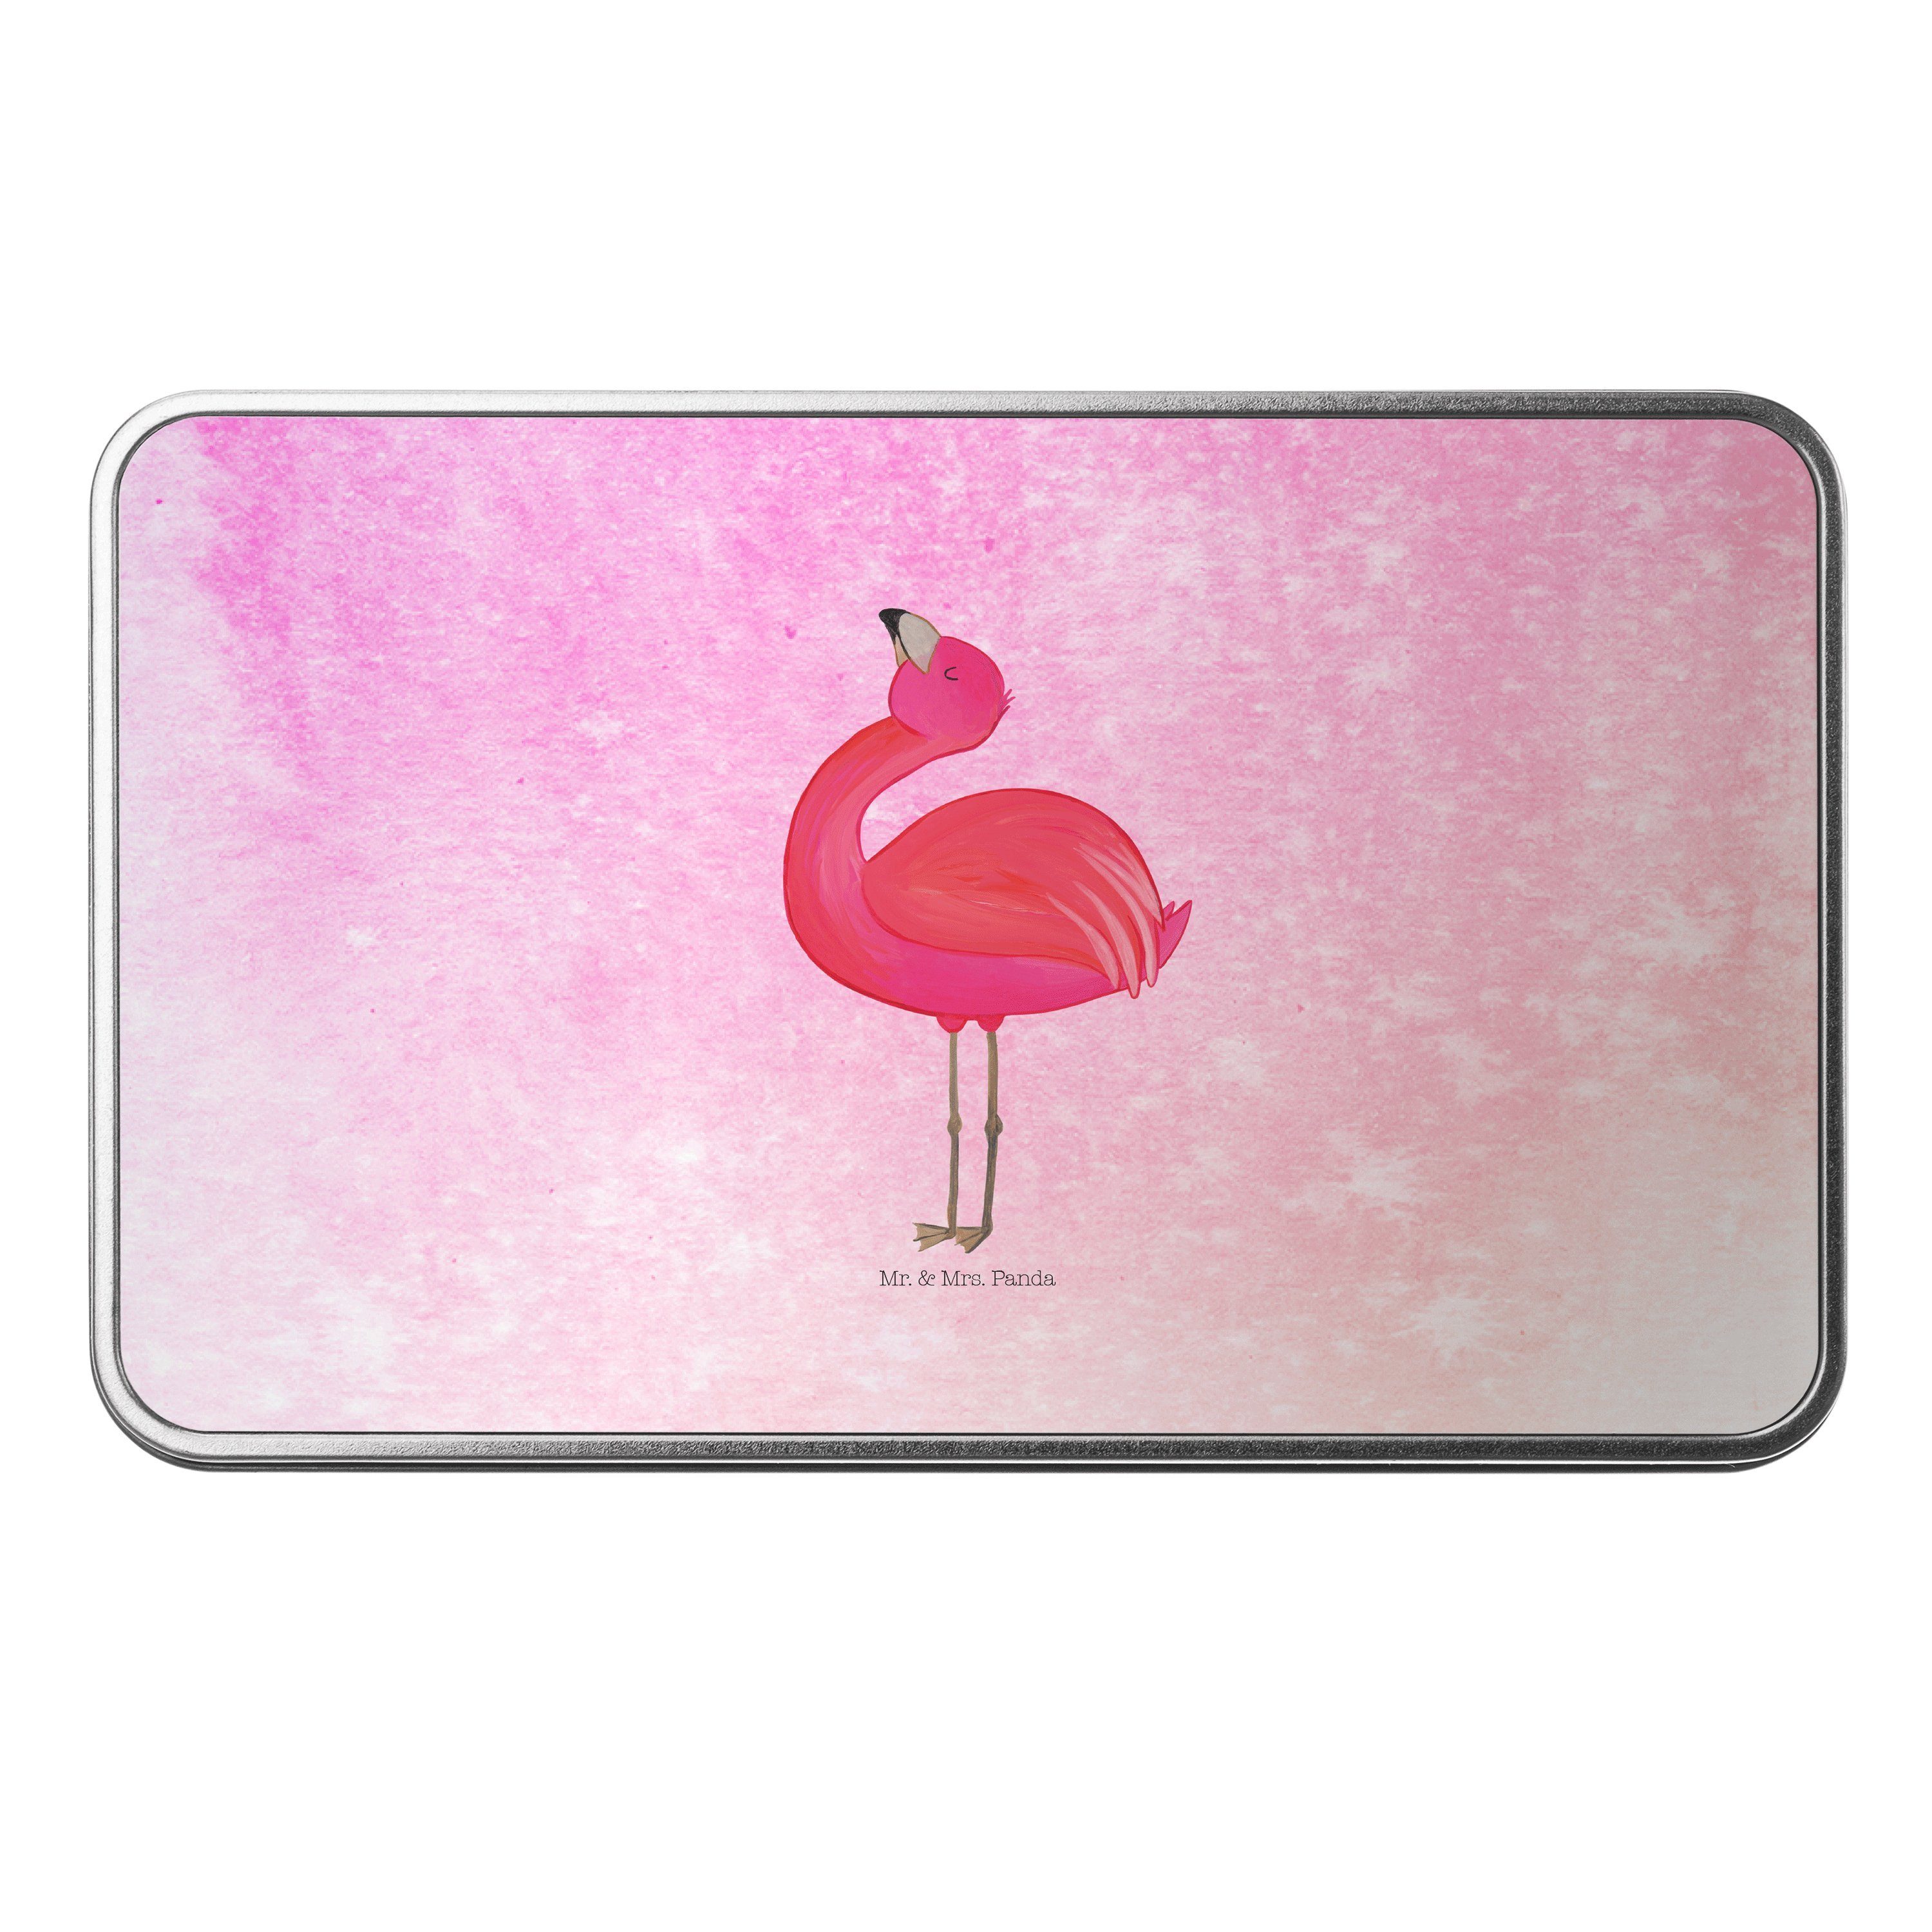 Mr. & Mrs. Panda Dose Flamingo stolz - Aquarell Pink - Geschenk, Metalldose, Blechbox, Mama (1 St) | Dosen